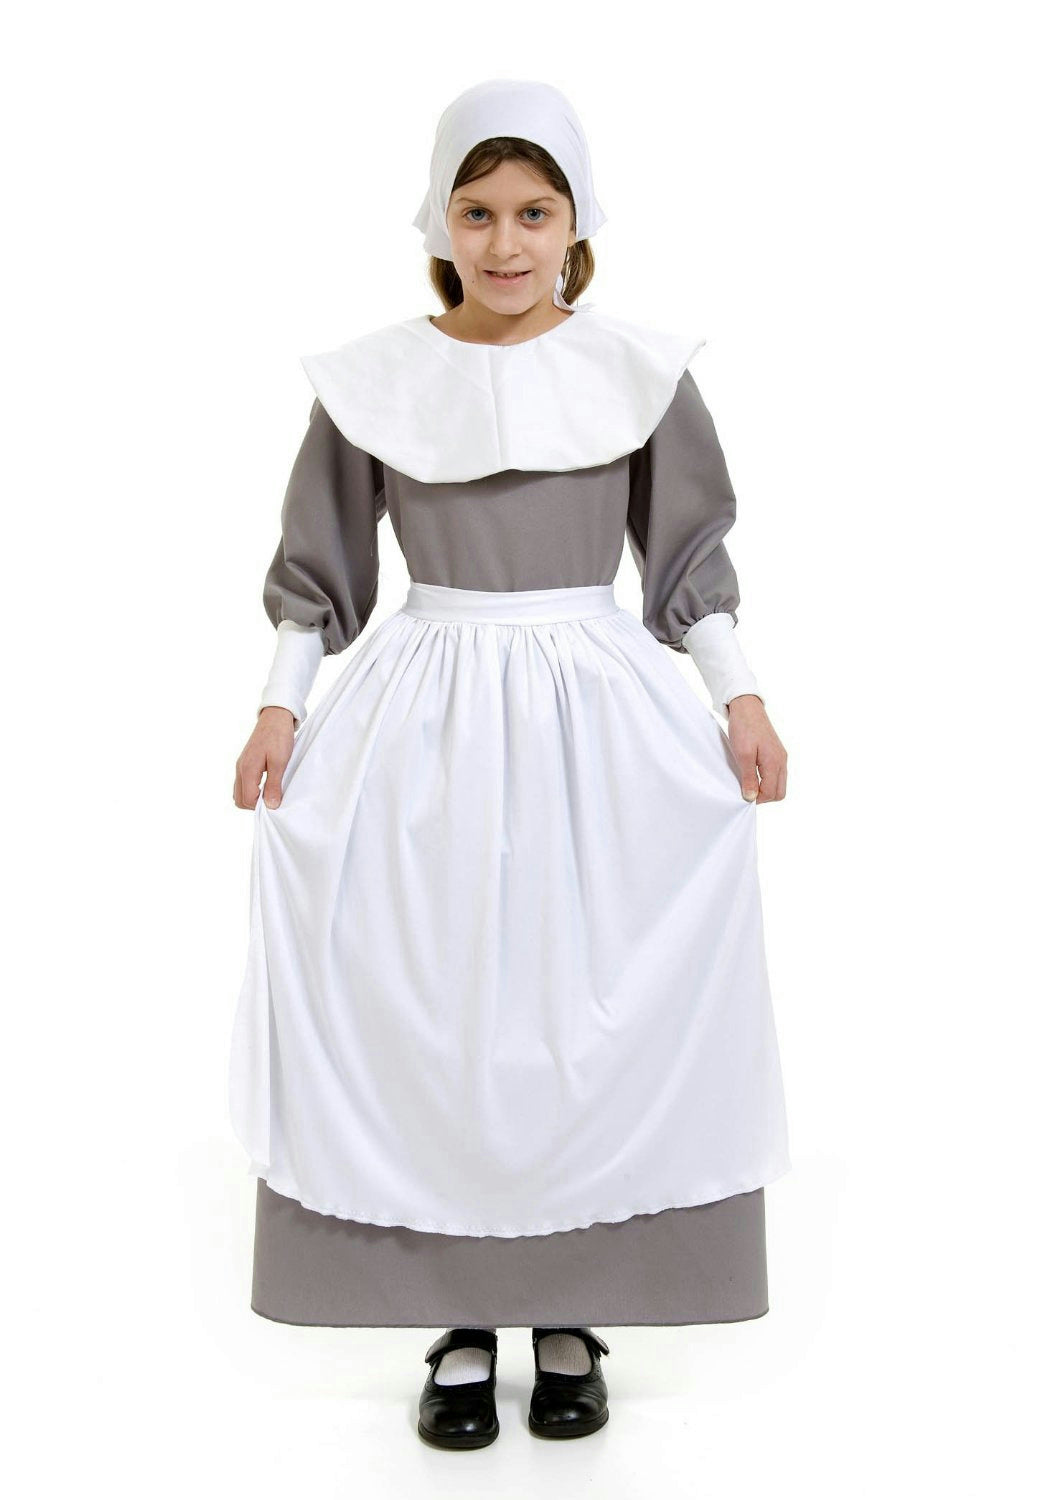 Peter Alan Pilgrim Girl Deluxe Child Costume Size Small 4-6